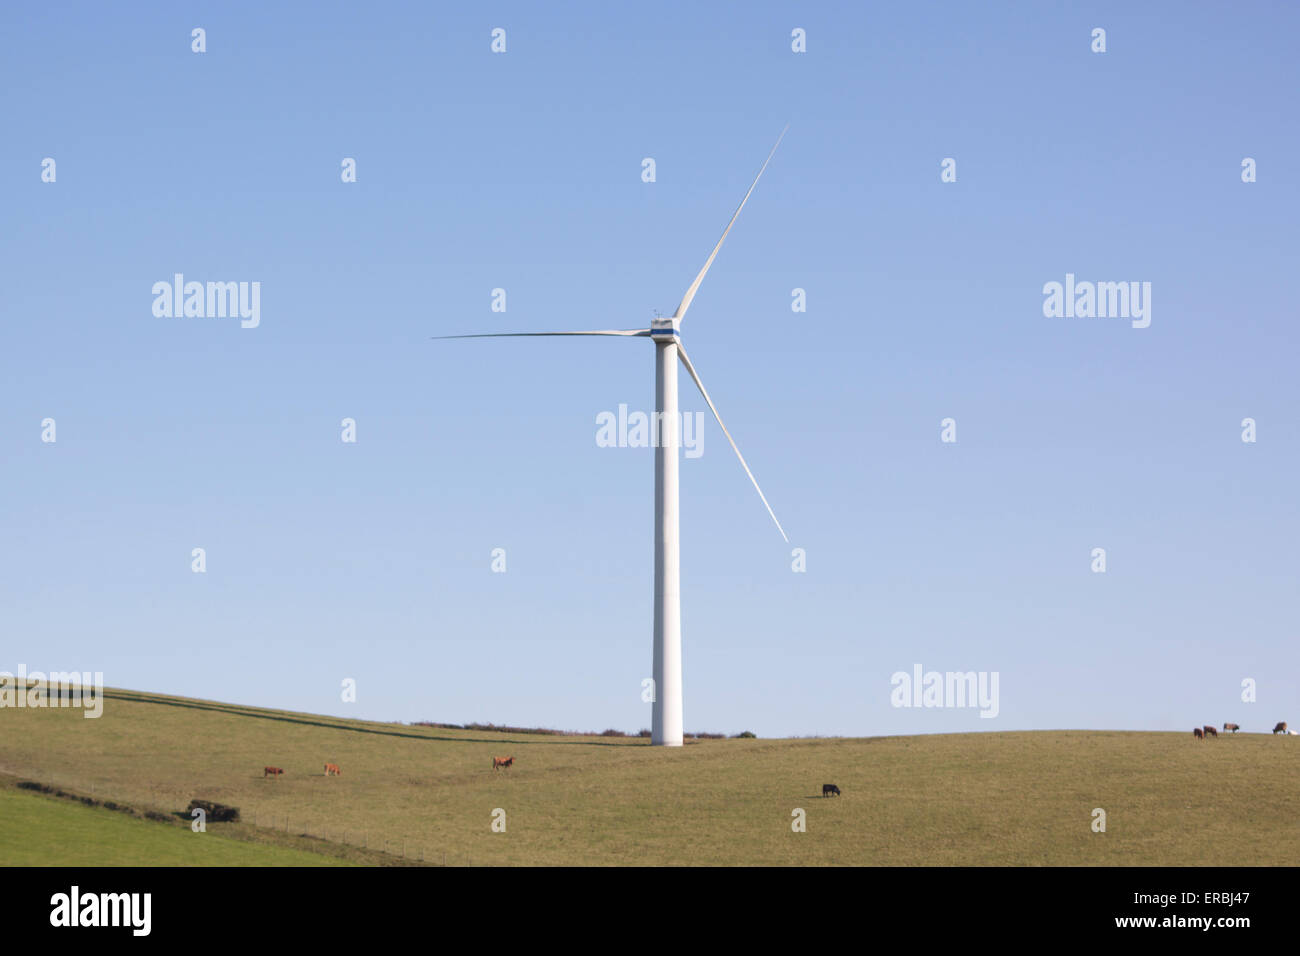 A wind turbine in a field Stock Photo